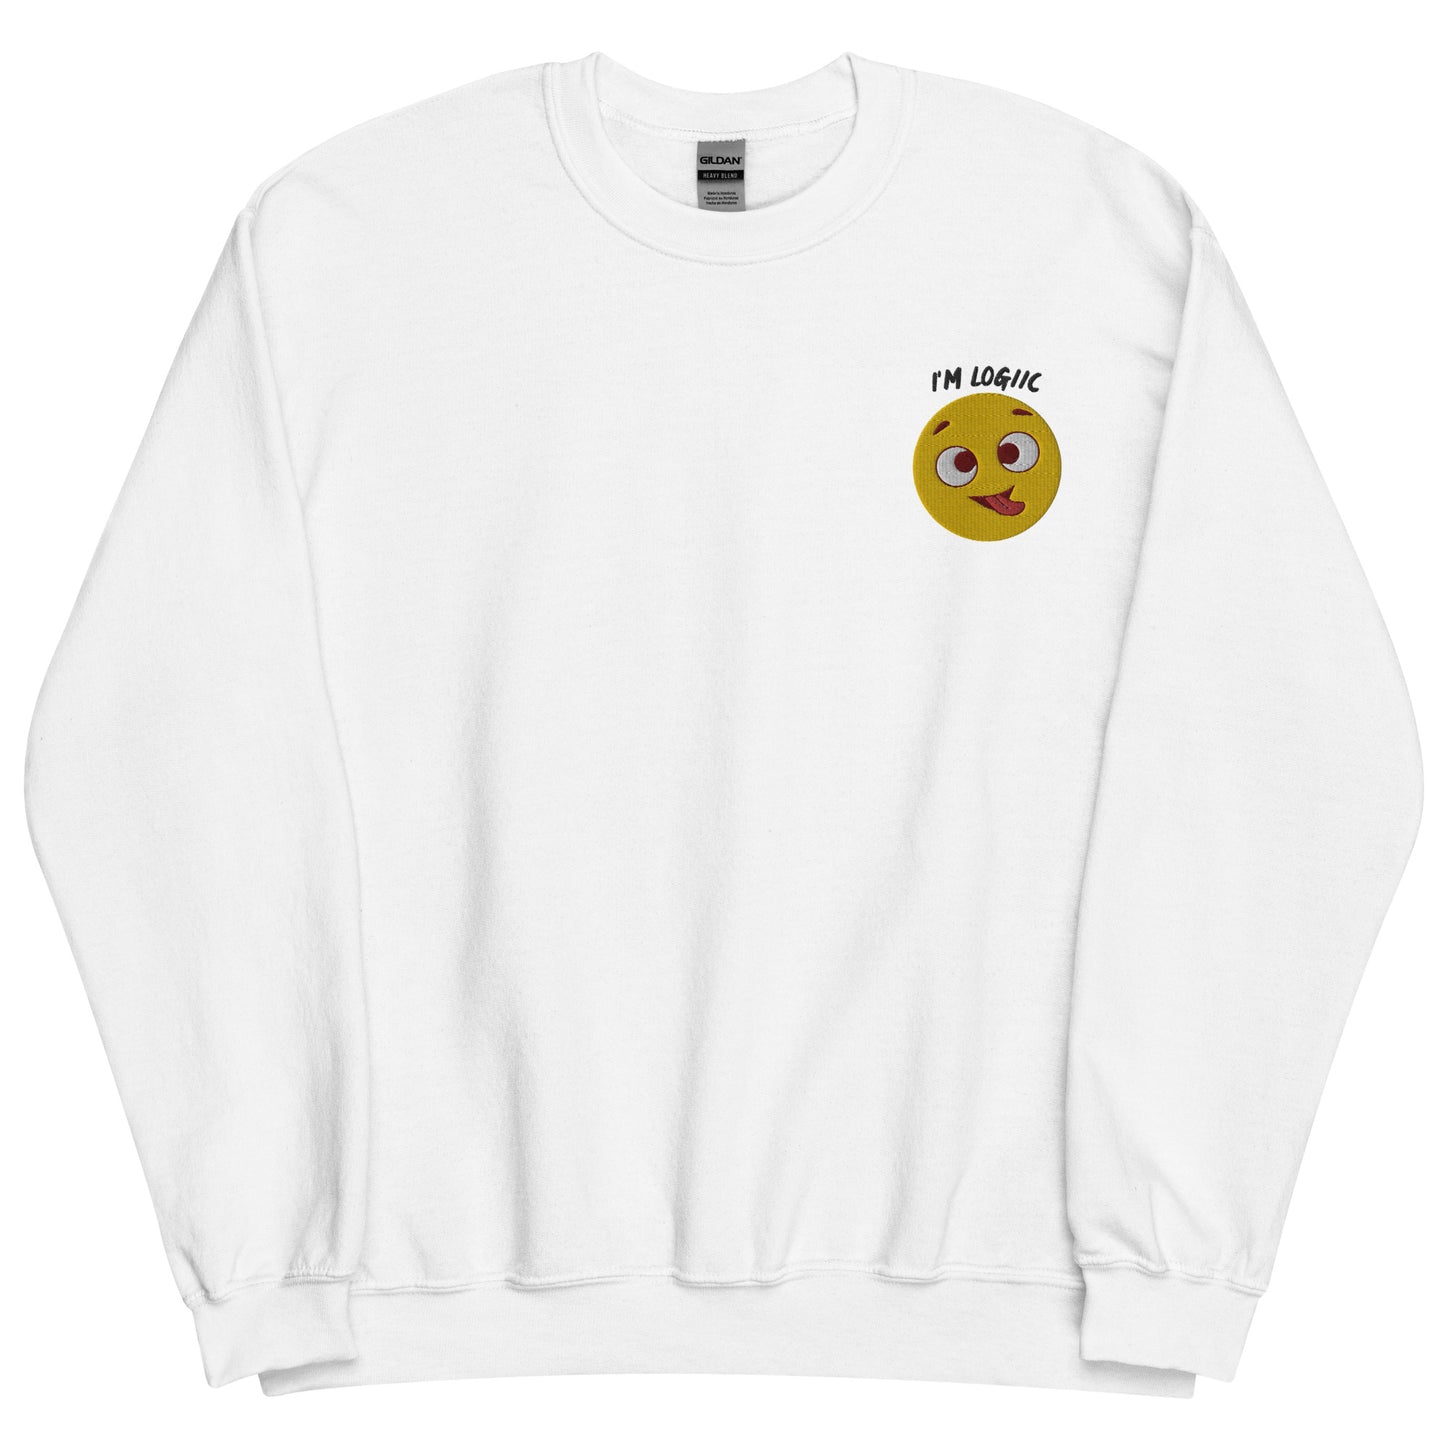 Silly Face Unisex Sweatshirt - White / S